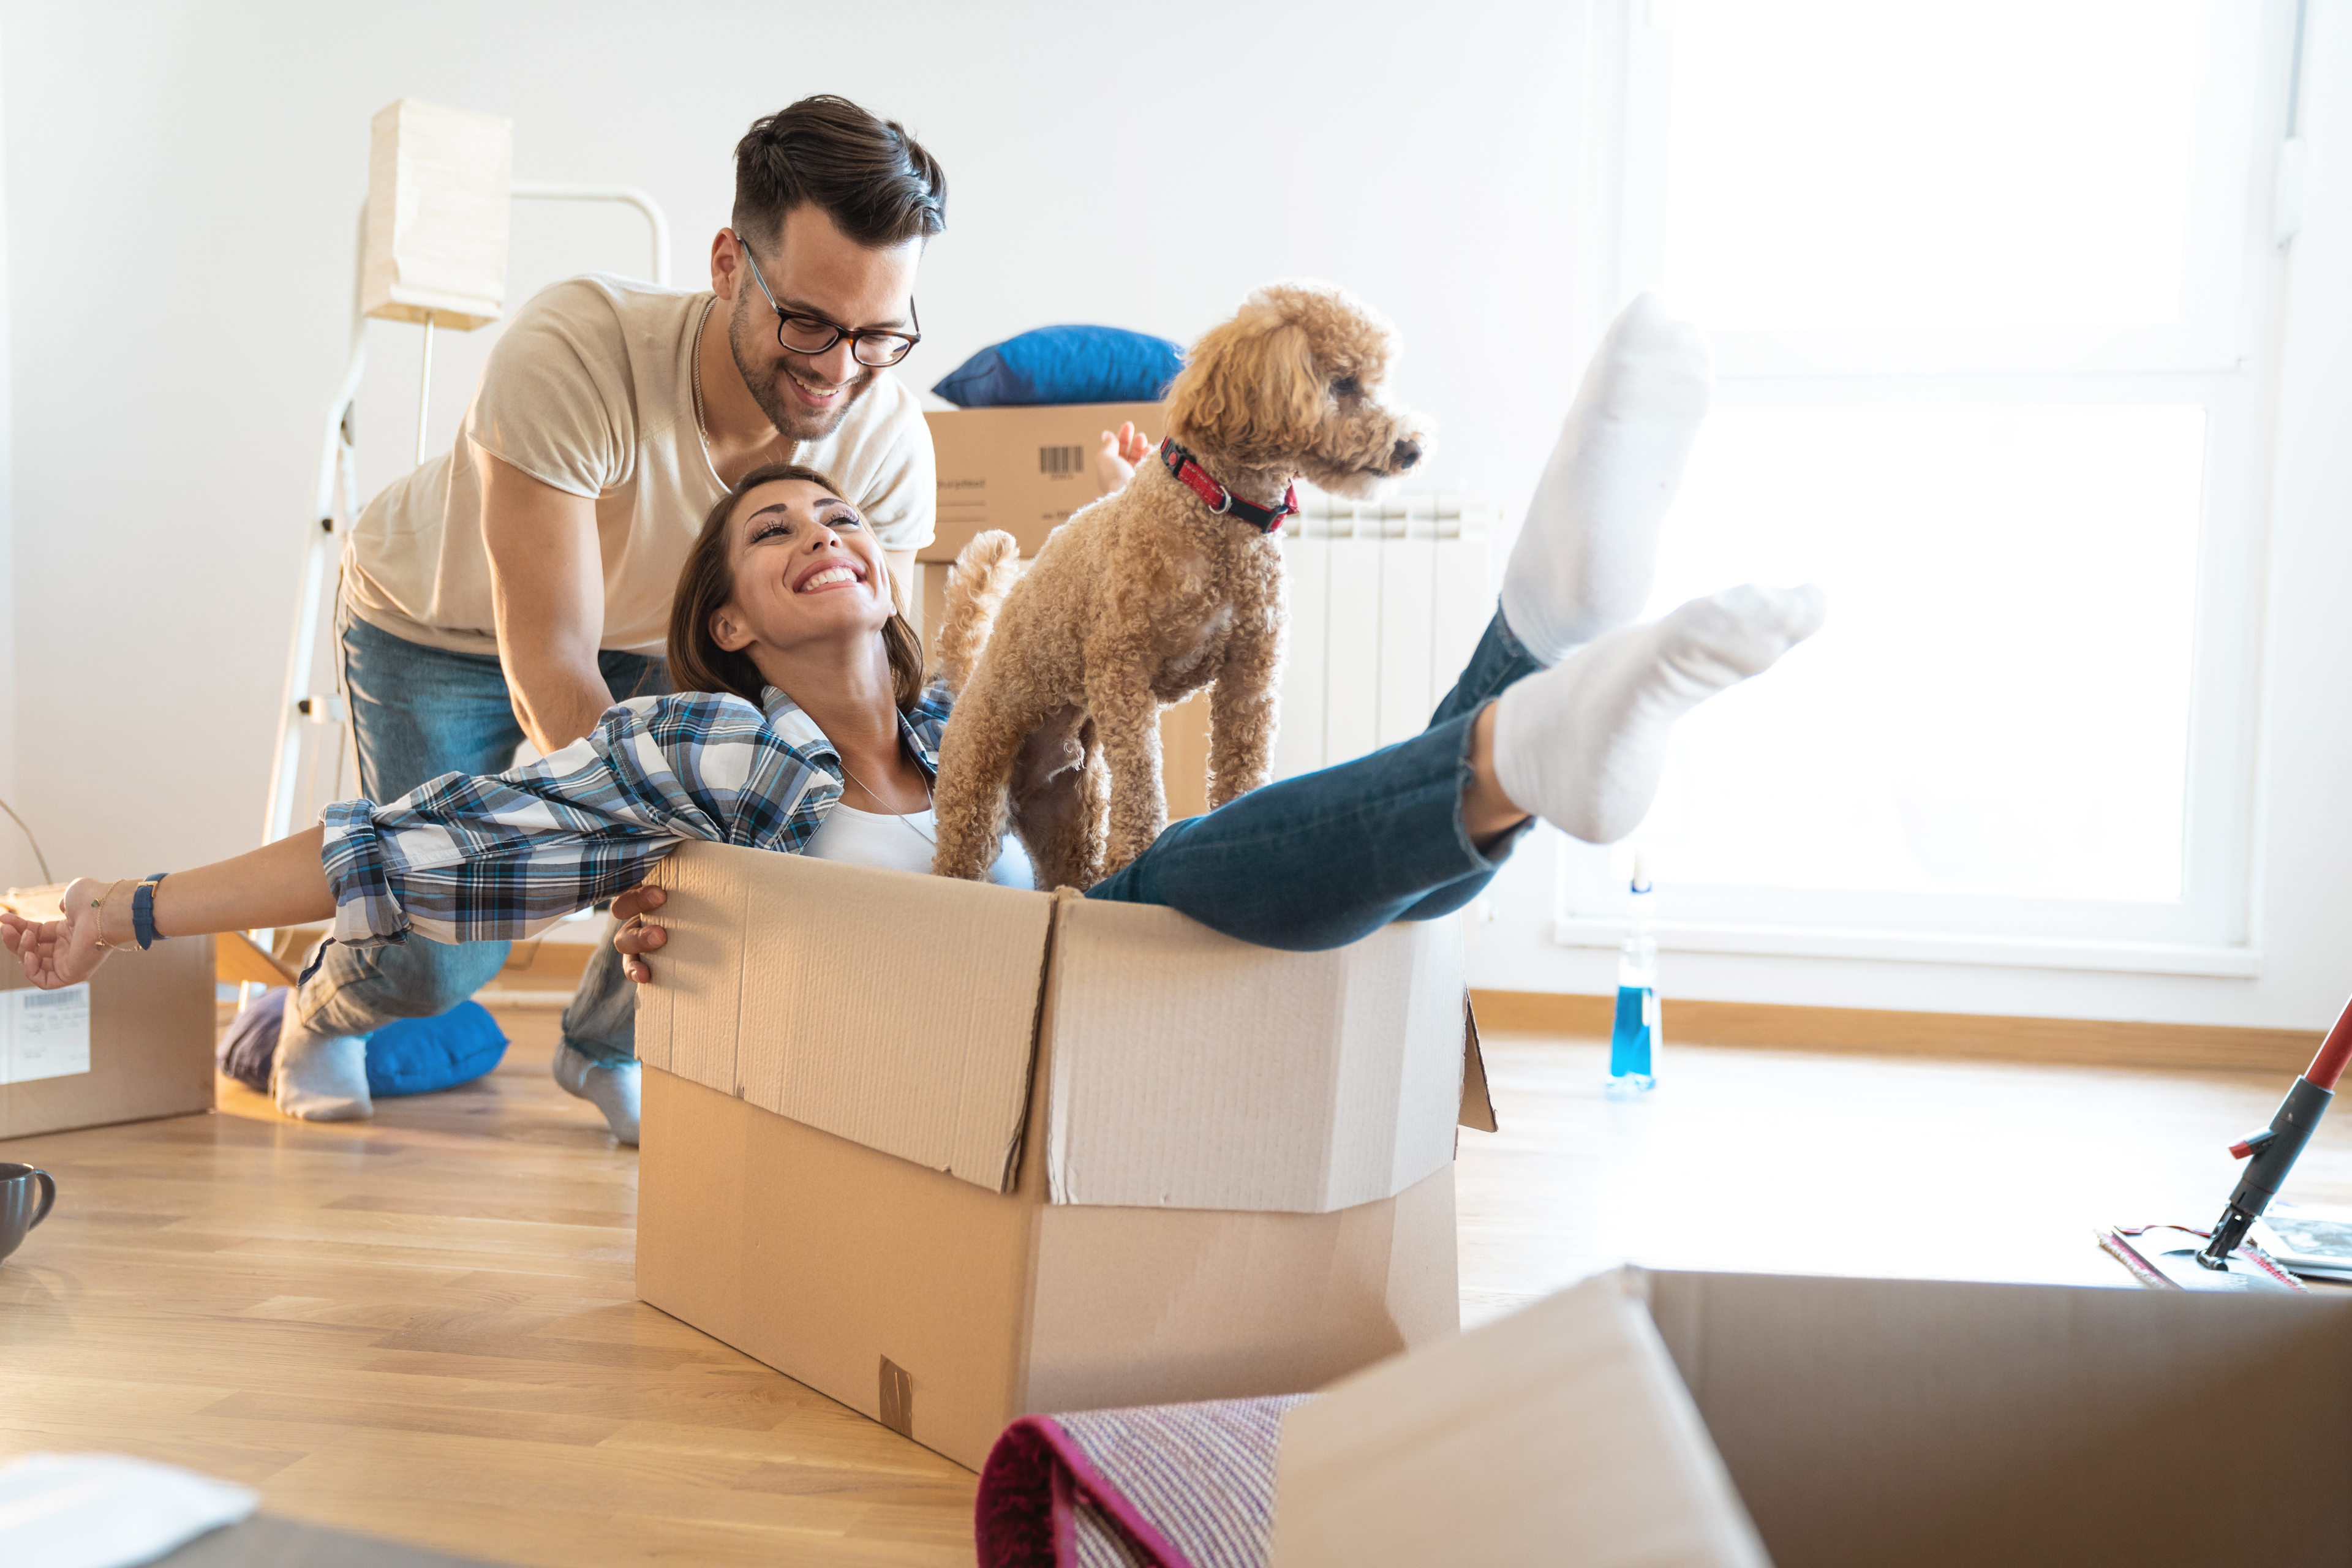 Boyfriend & Girlfriend move box with dog in 